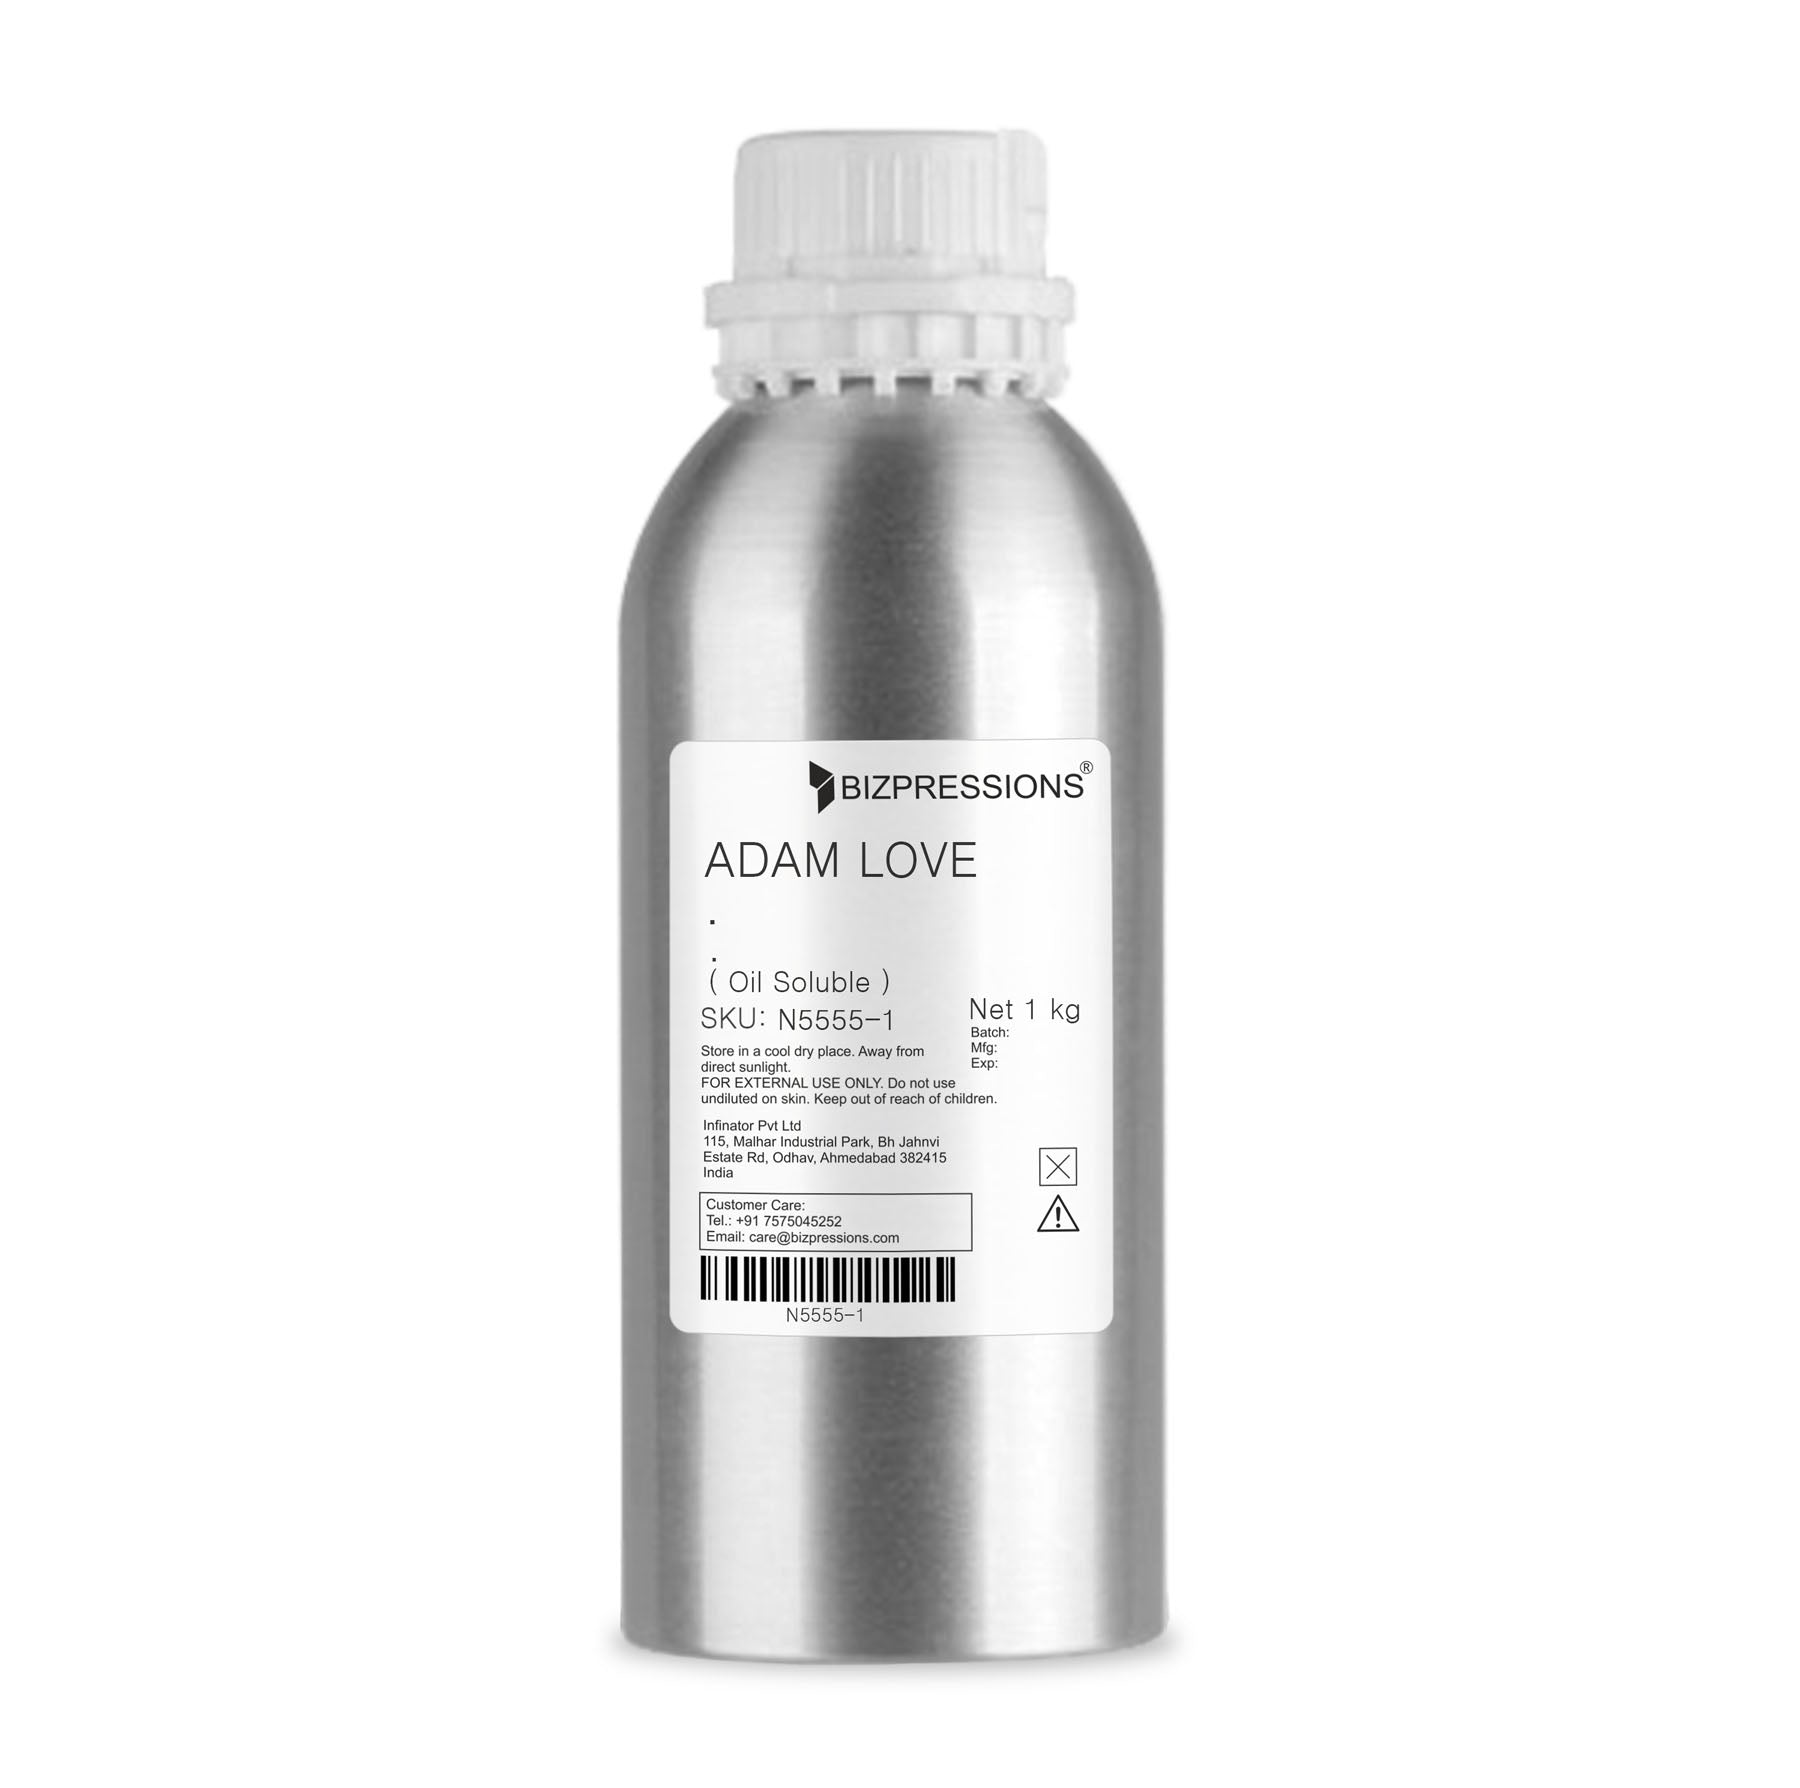 ADAM LOVE - Fragrance ( Oil Soluble ) - 1 kg